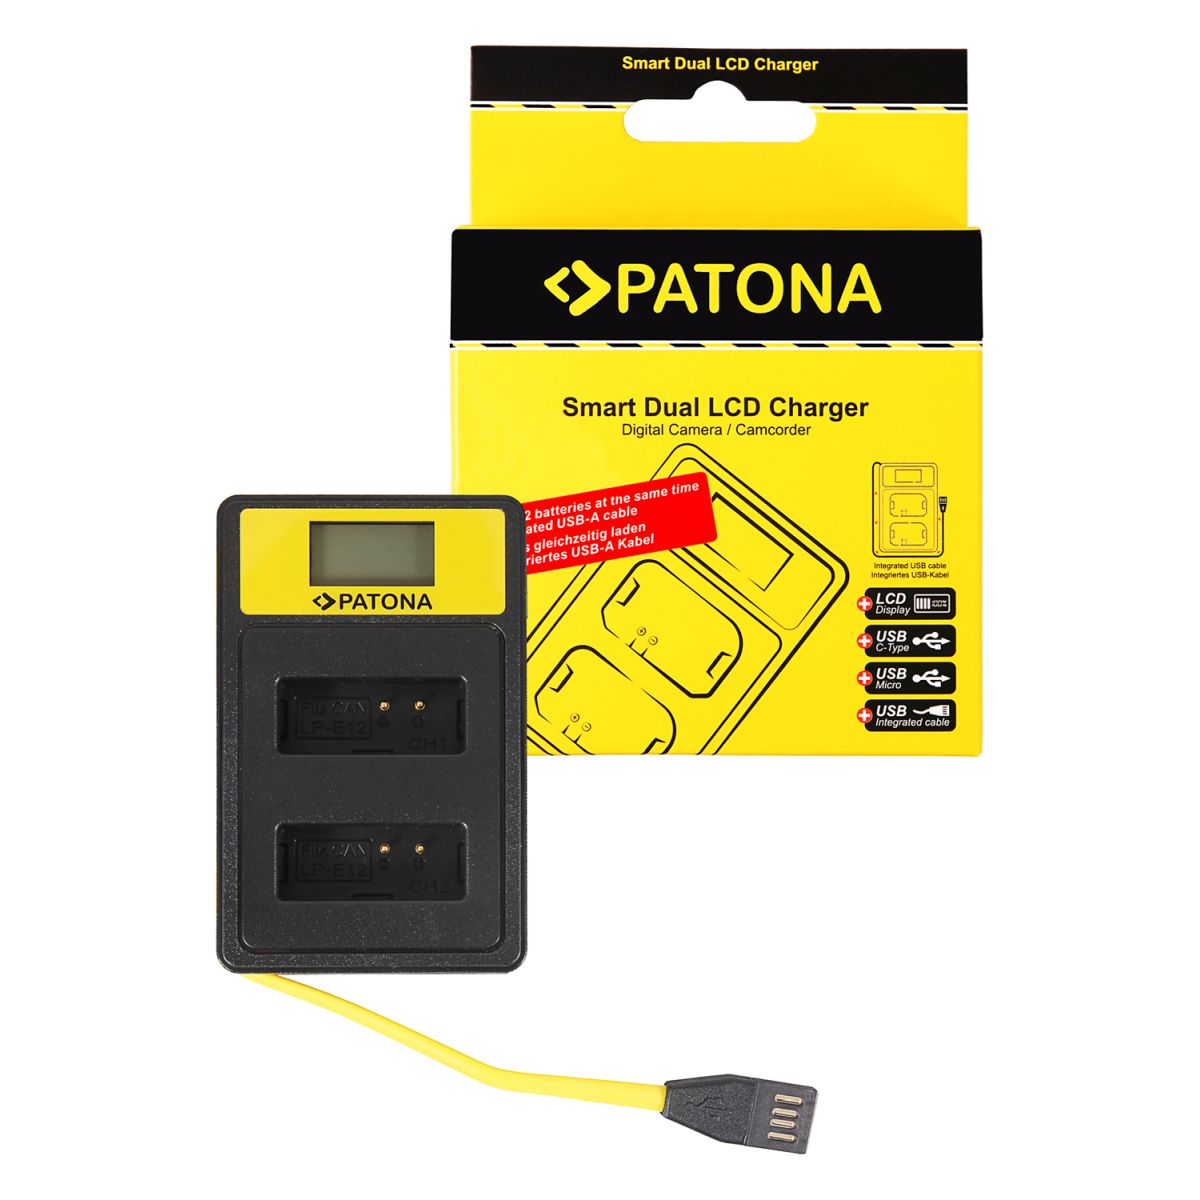 Patona Dual LCD USB Ladegerät Canon LP-E12